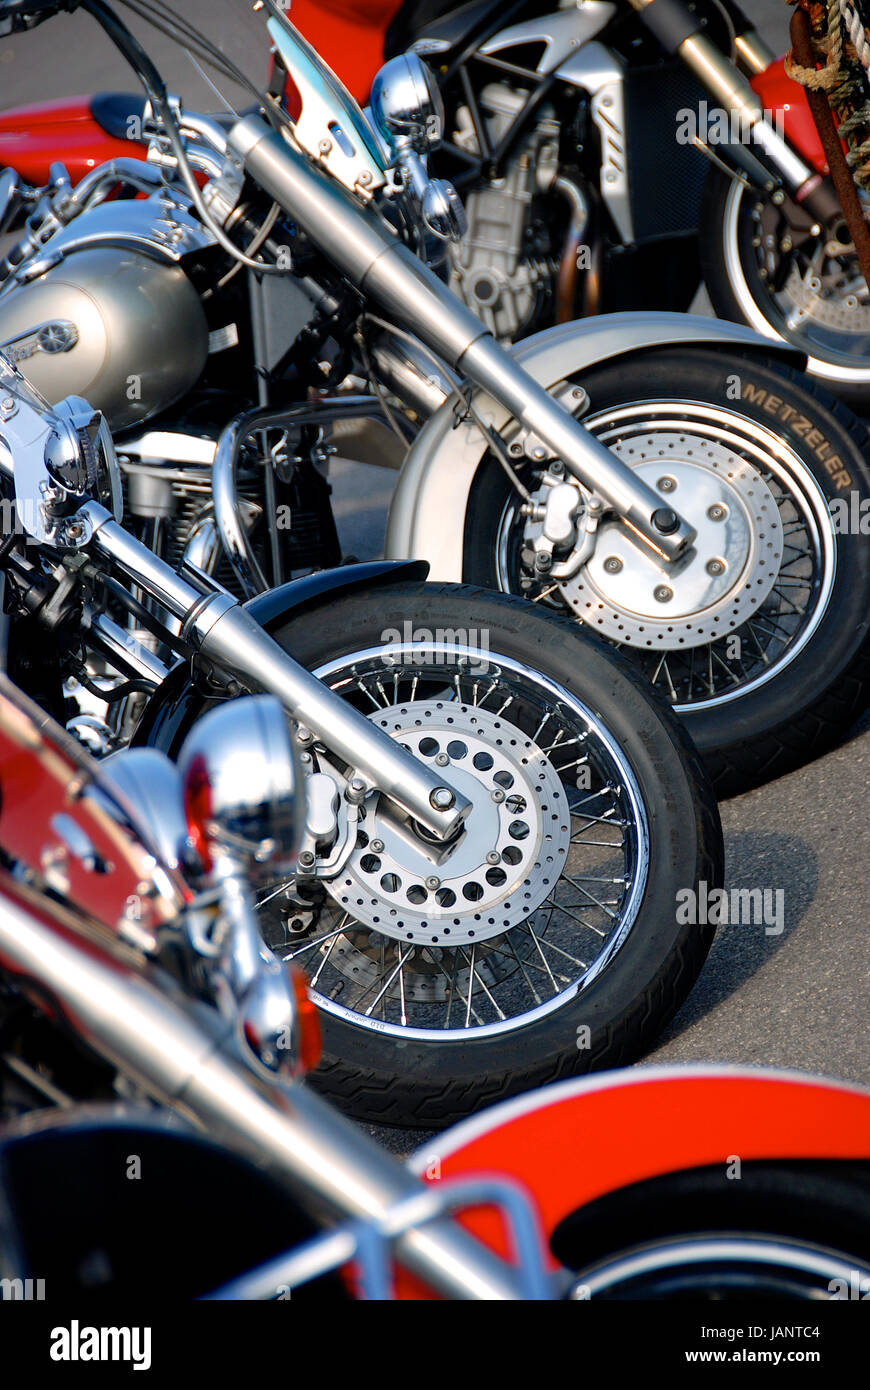 Yamaha DragStar cruiser motorcycle Stock Photo